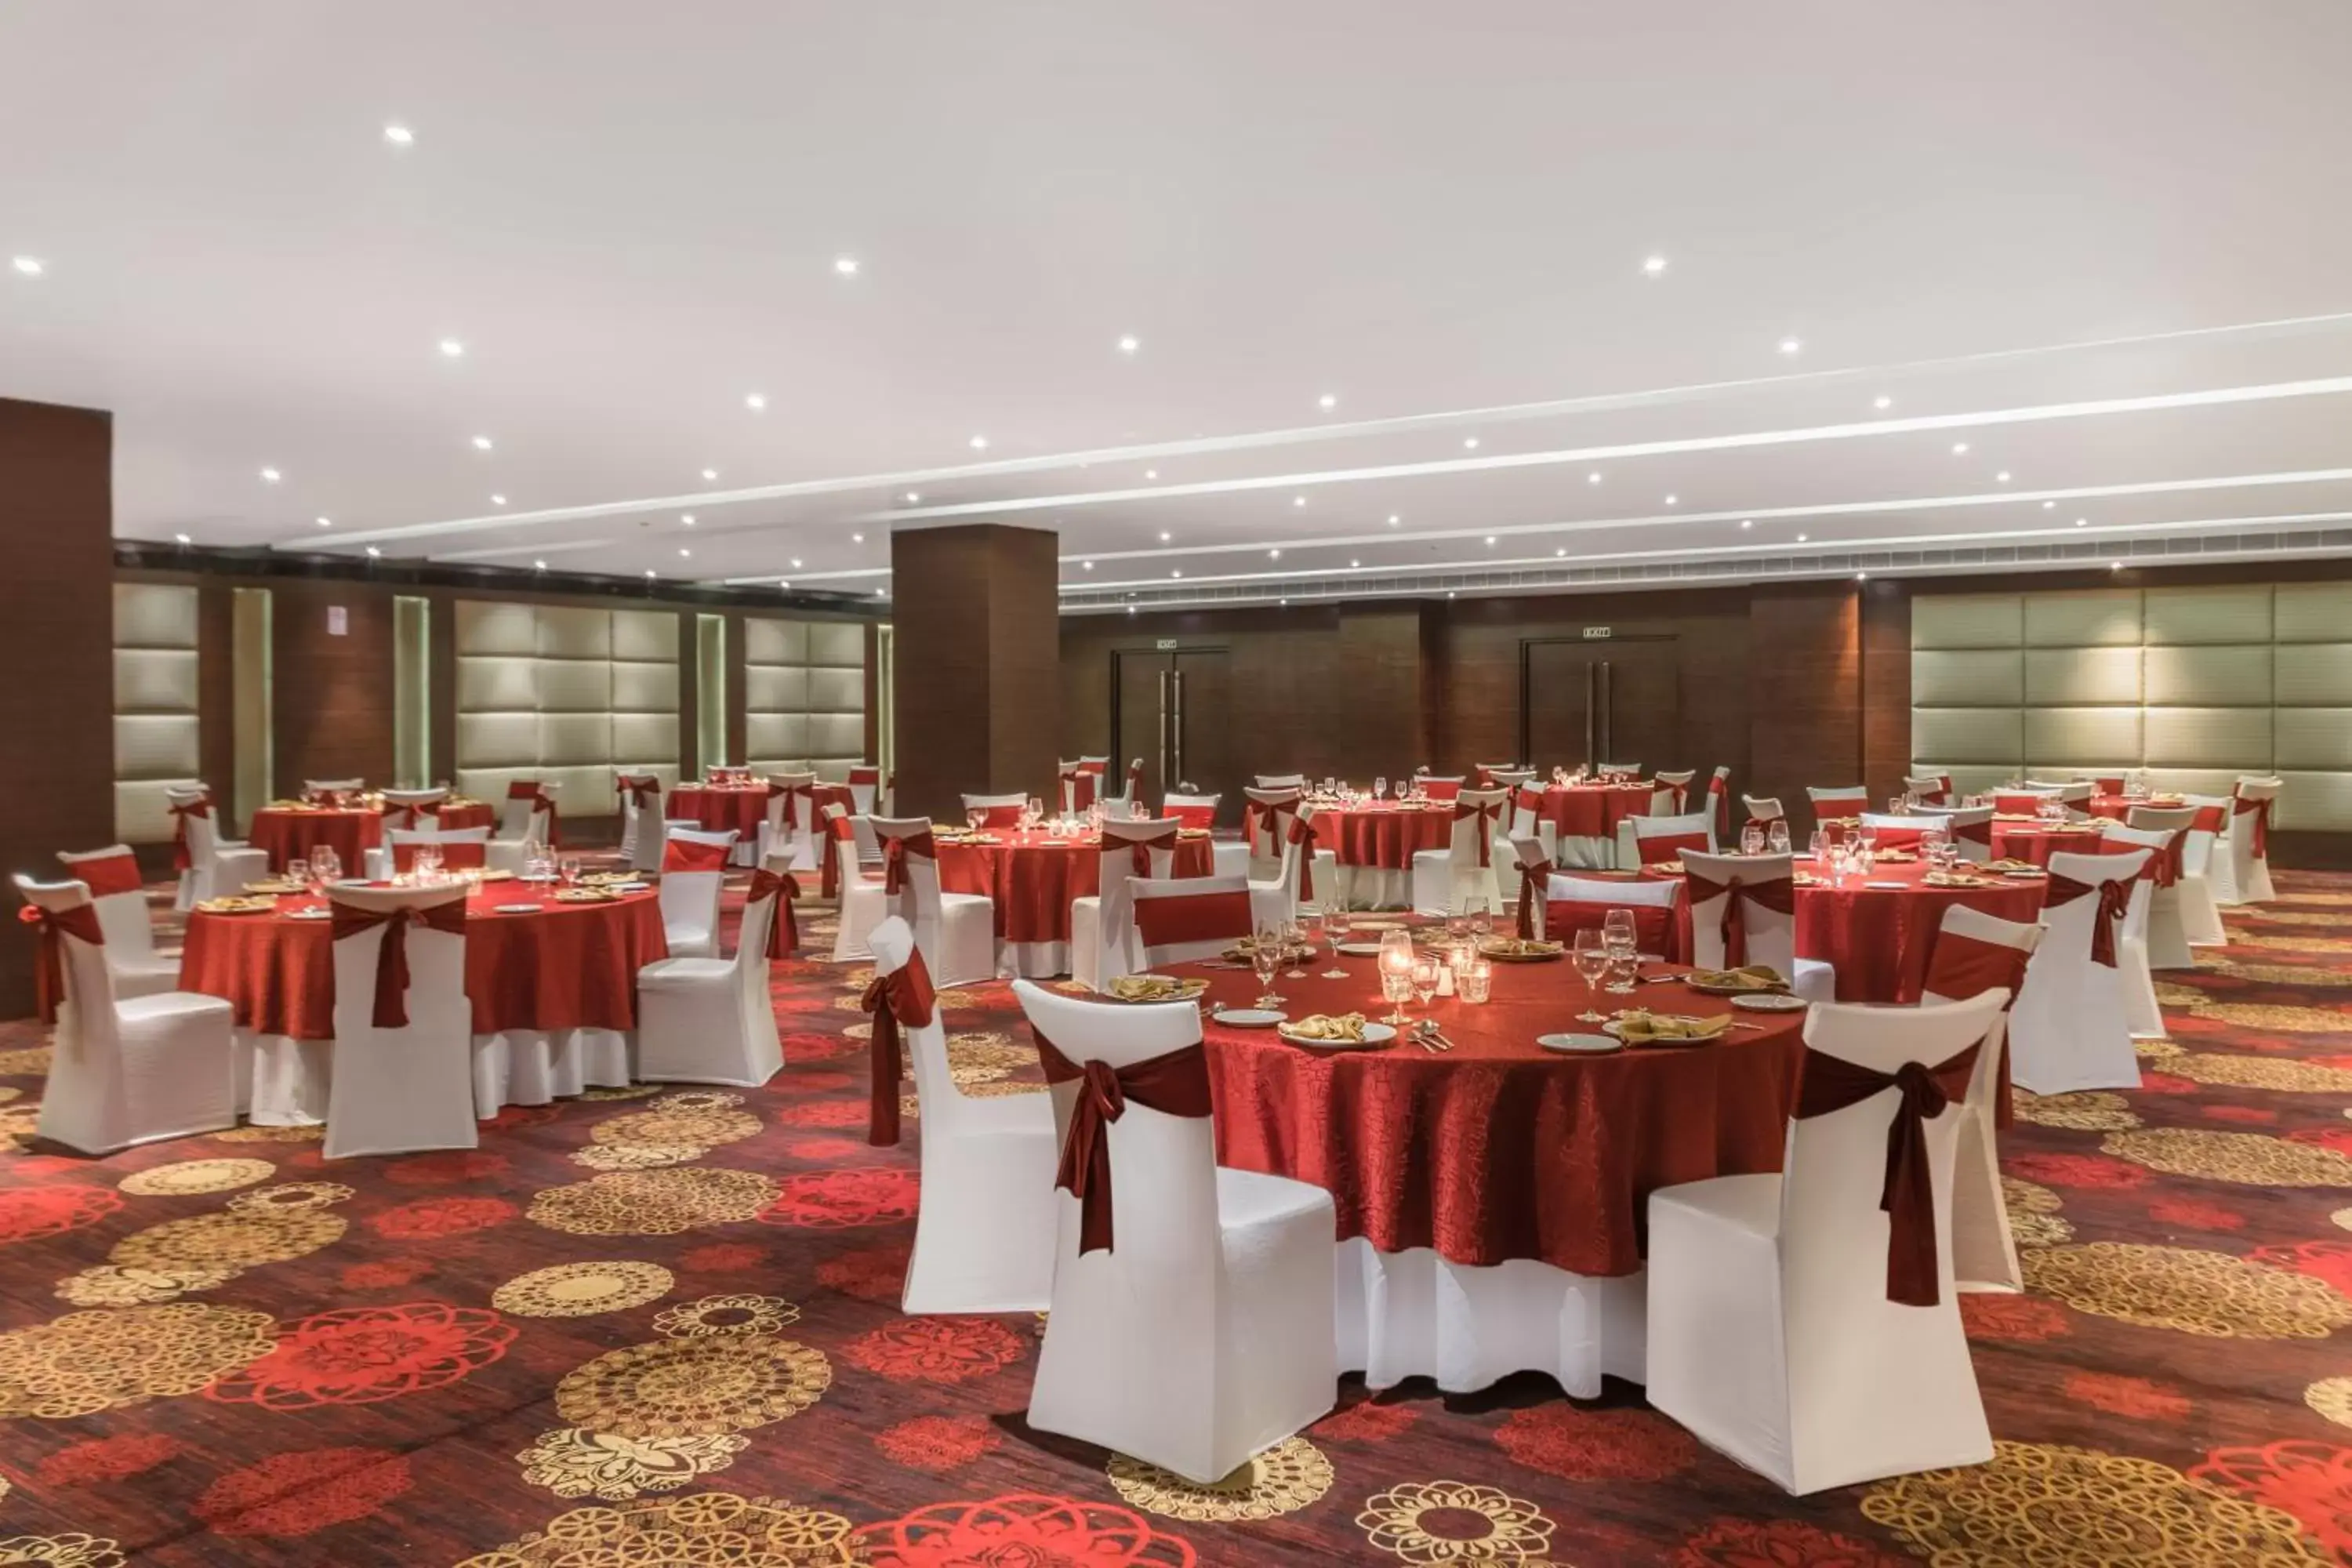 Banquet/Function facilities, Banquet Facilities in Radisson Hotel Agra